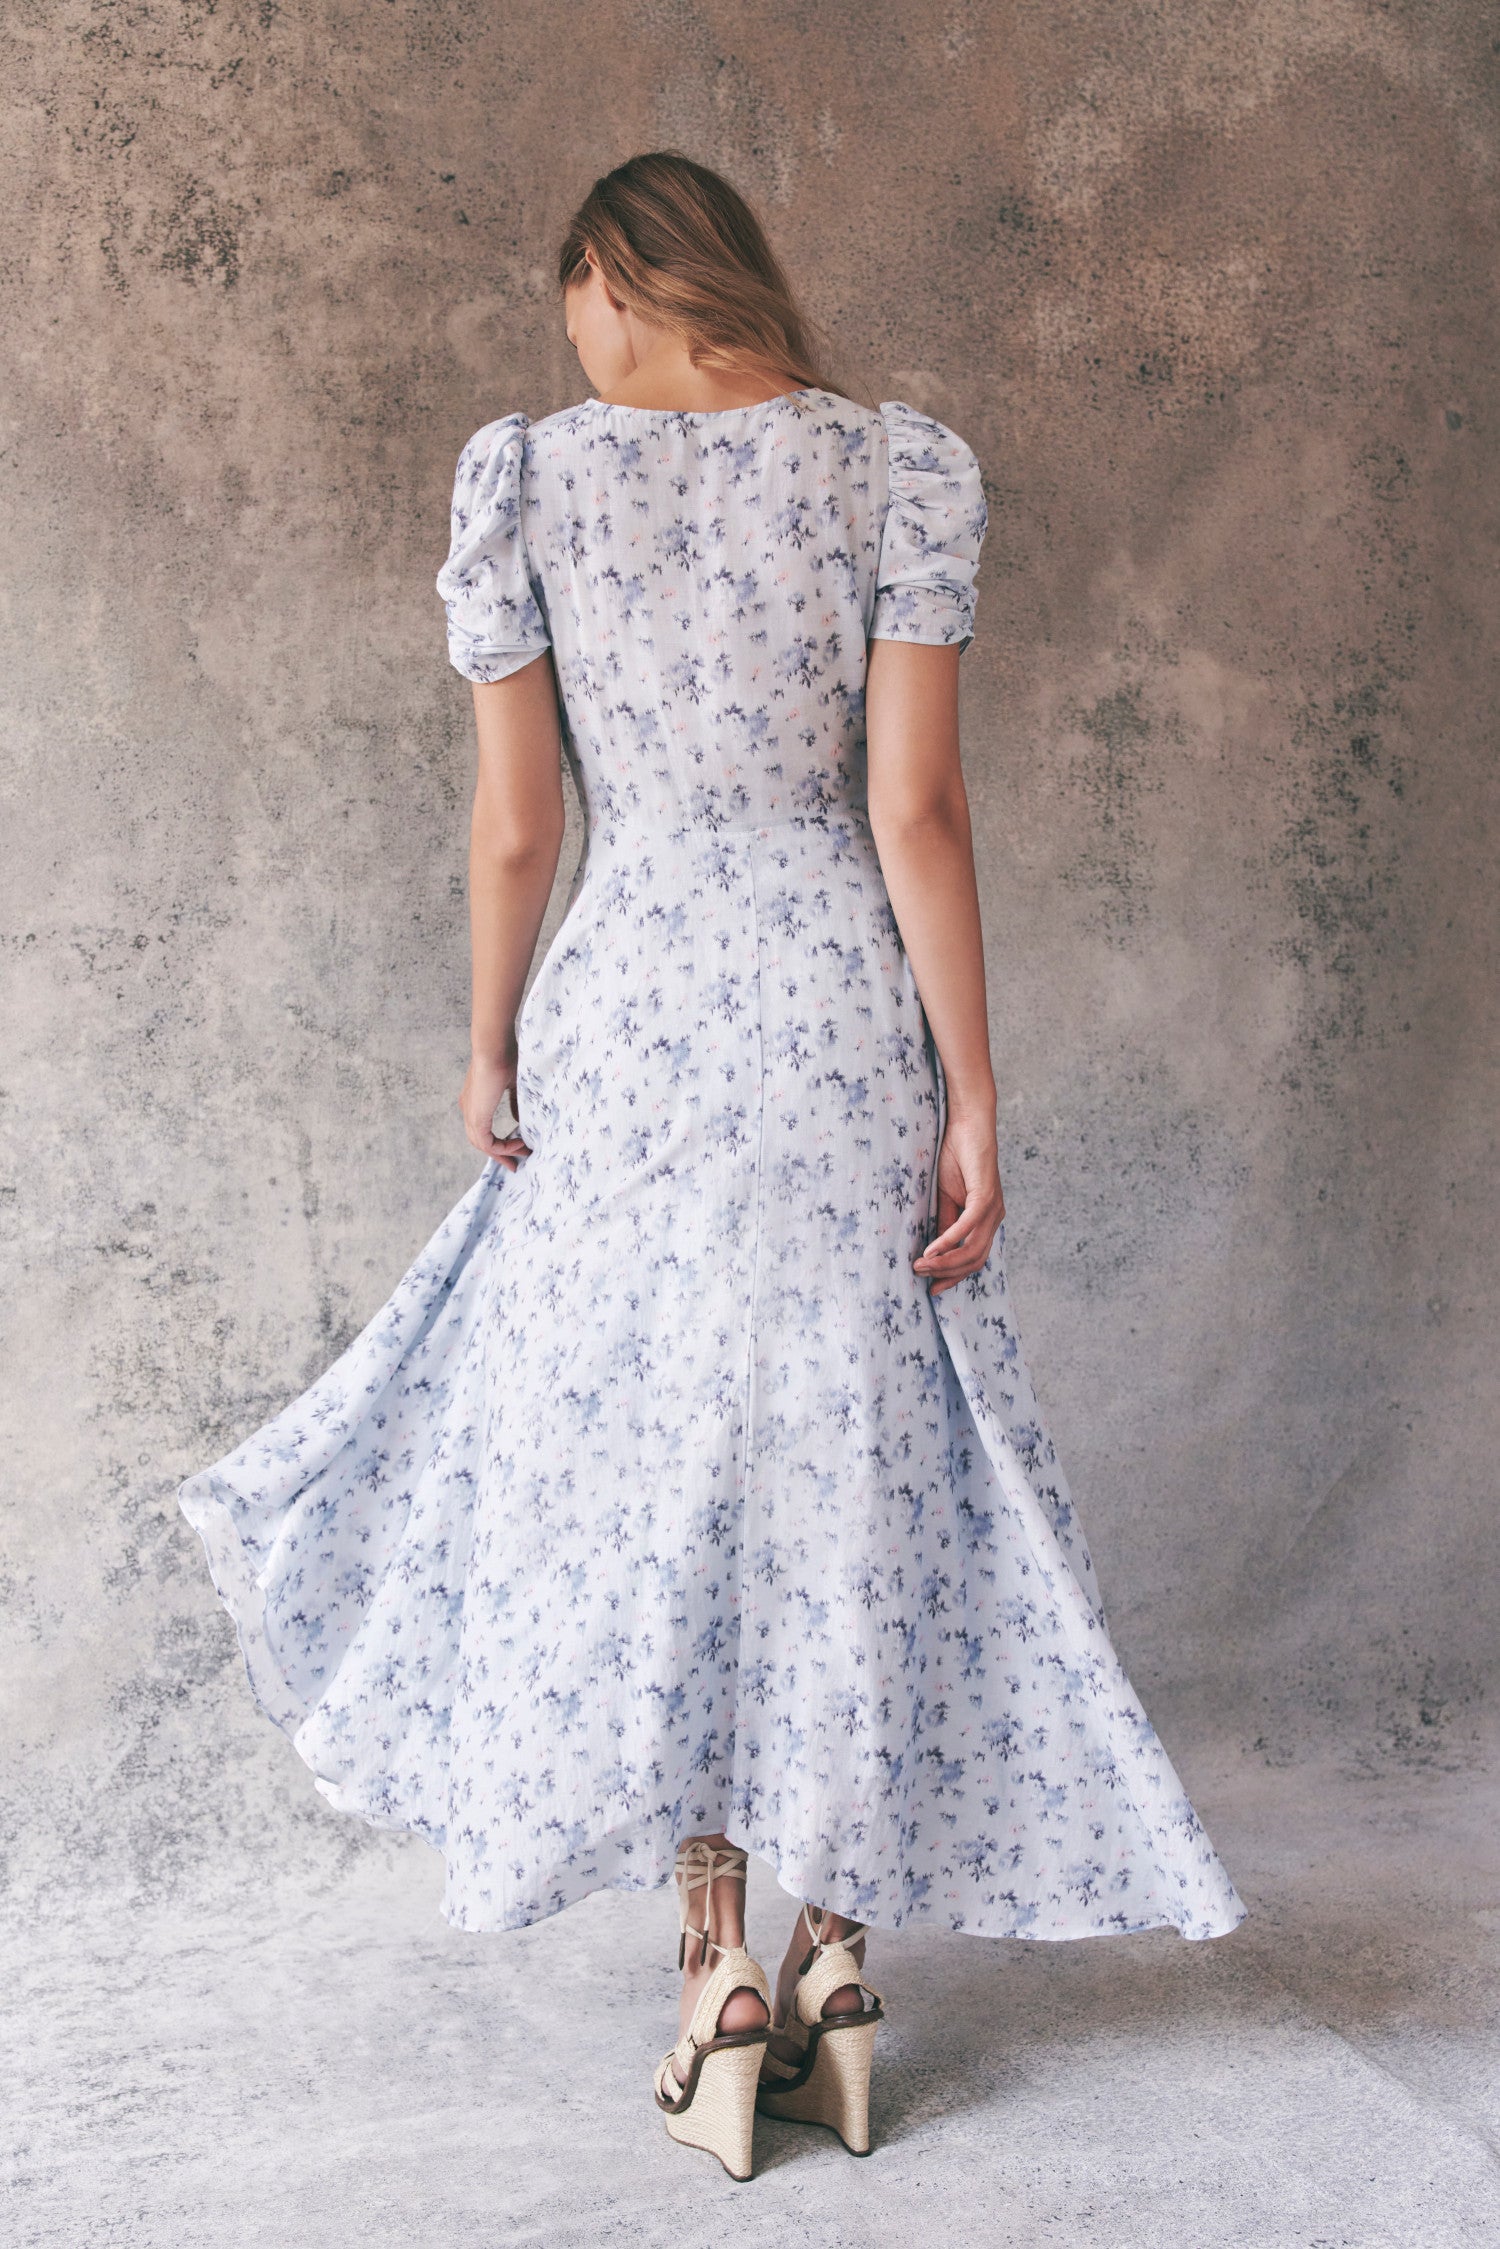 Back image of model wearing blue floral maxi dress